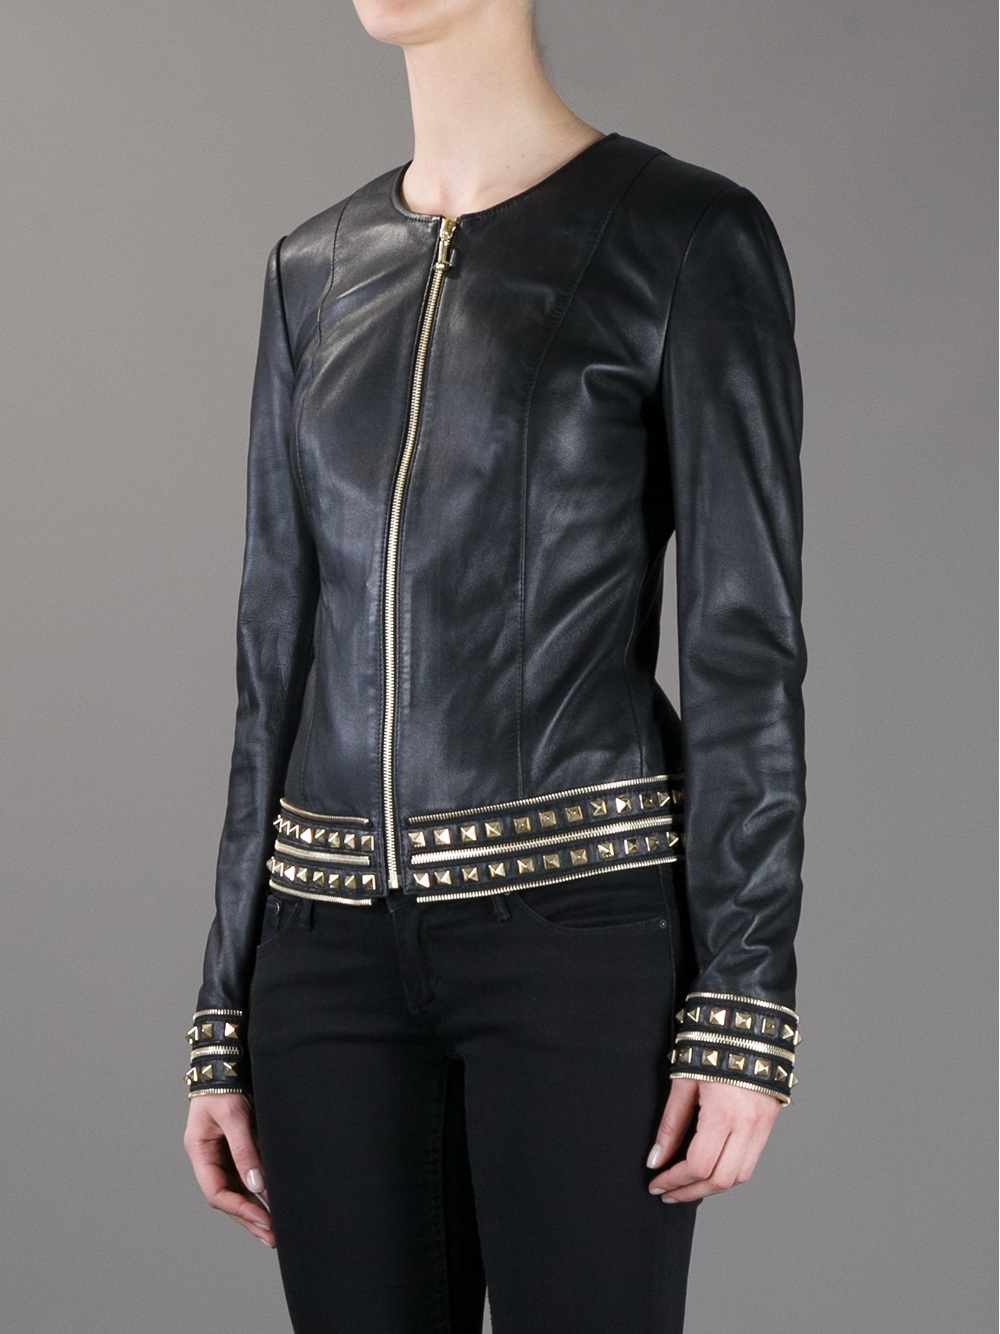 Philipp Plein Studded Leather Jacket in Black - Lyst